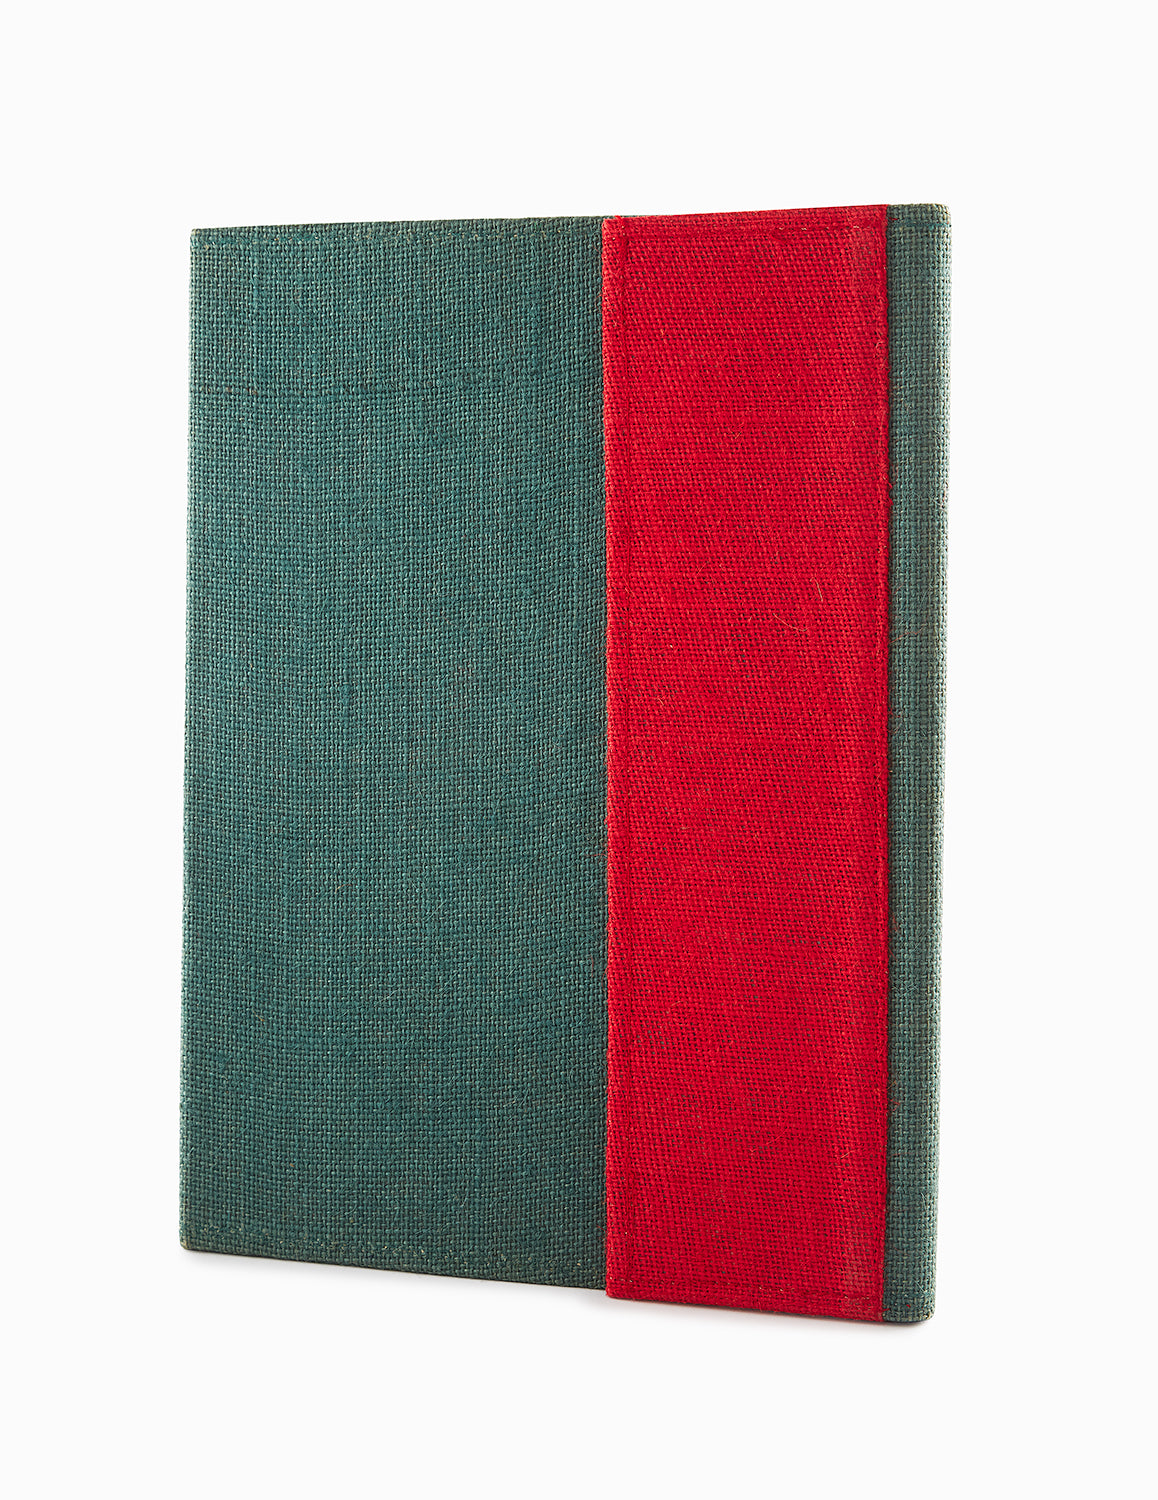 Light Green & Crimson Red Canvas Folder